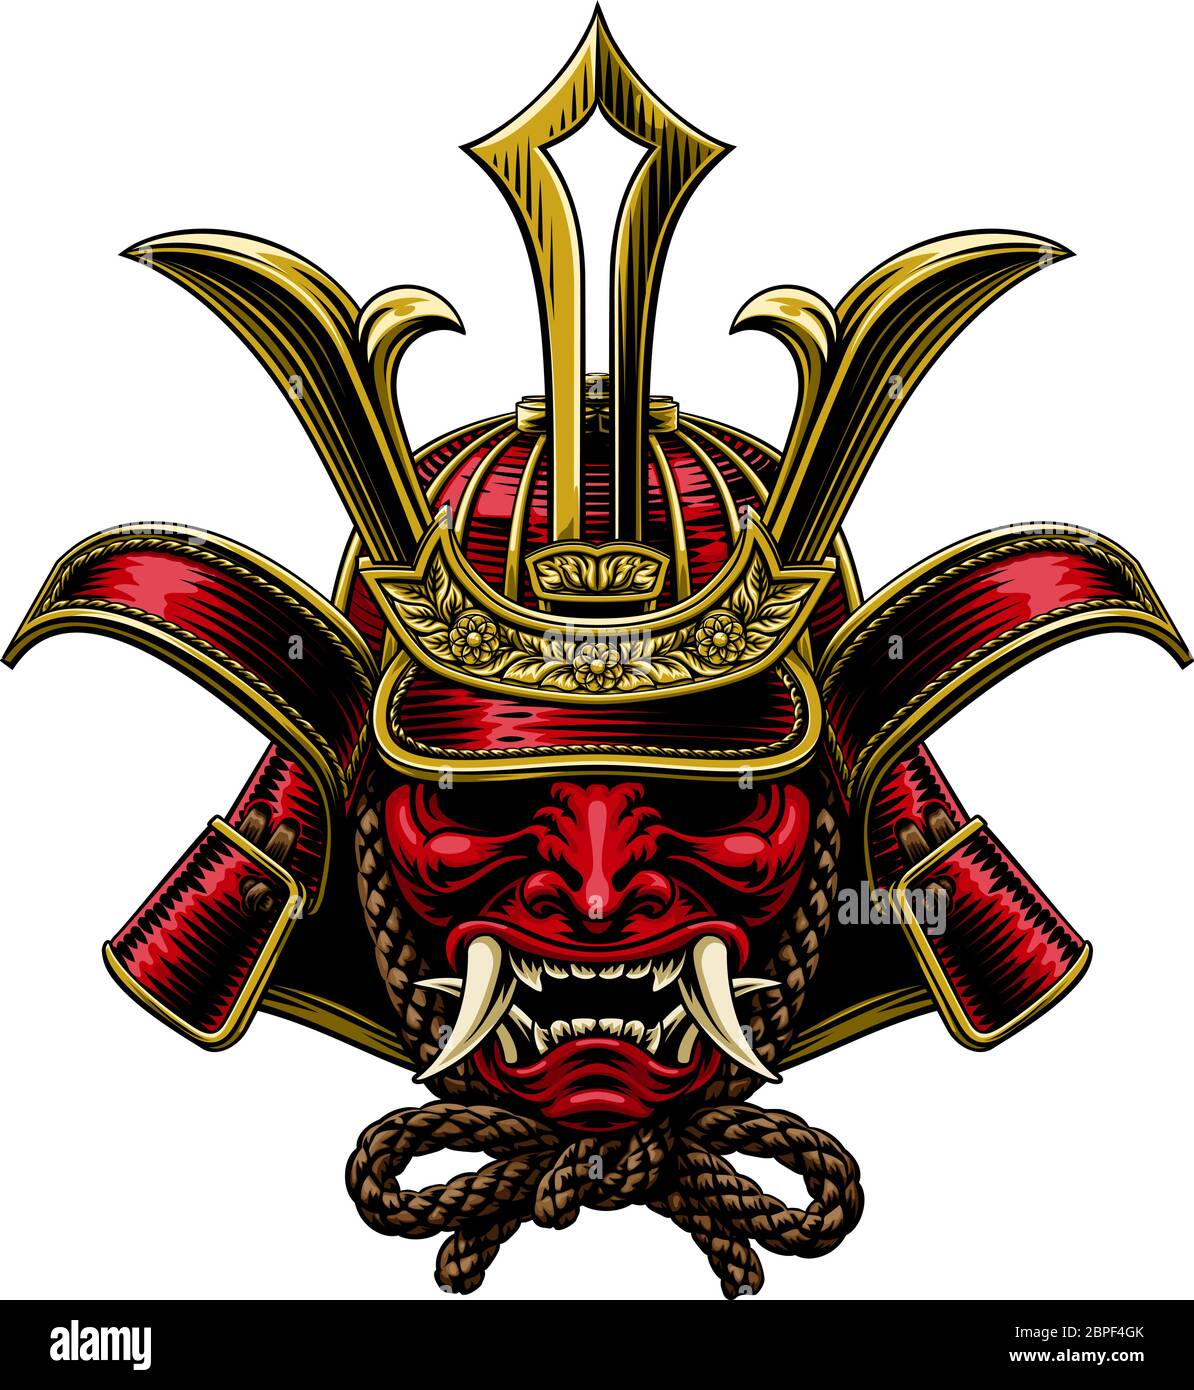 https://c8.alamy.com/compit/2bpf4gk/maschera-samurai-shogun-giapponese-warrior-casco-2bpf4gk.jpg